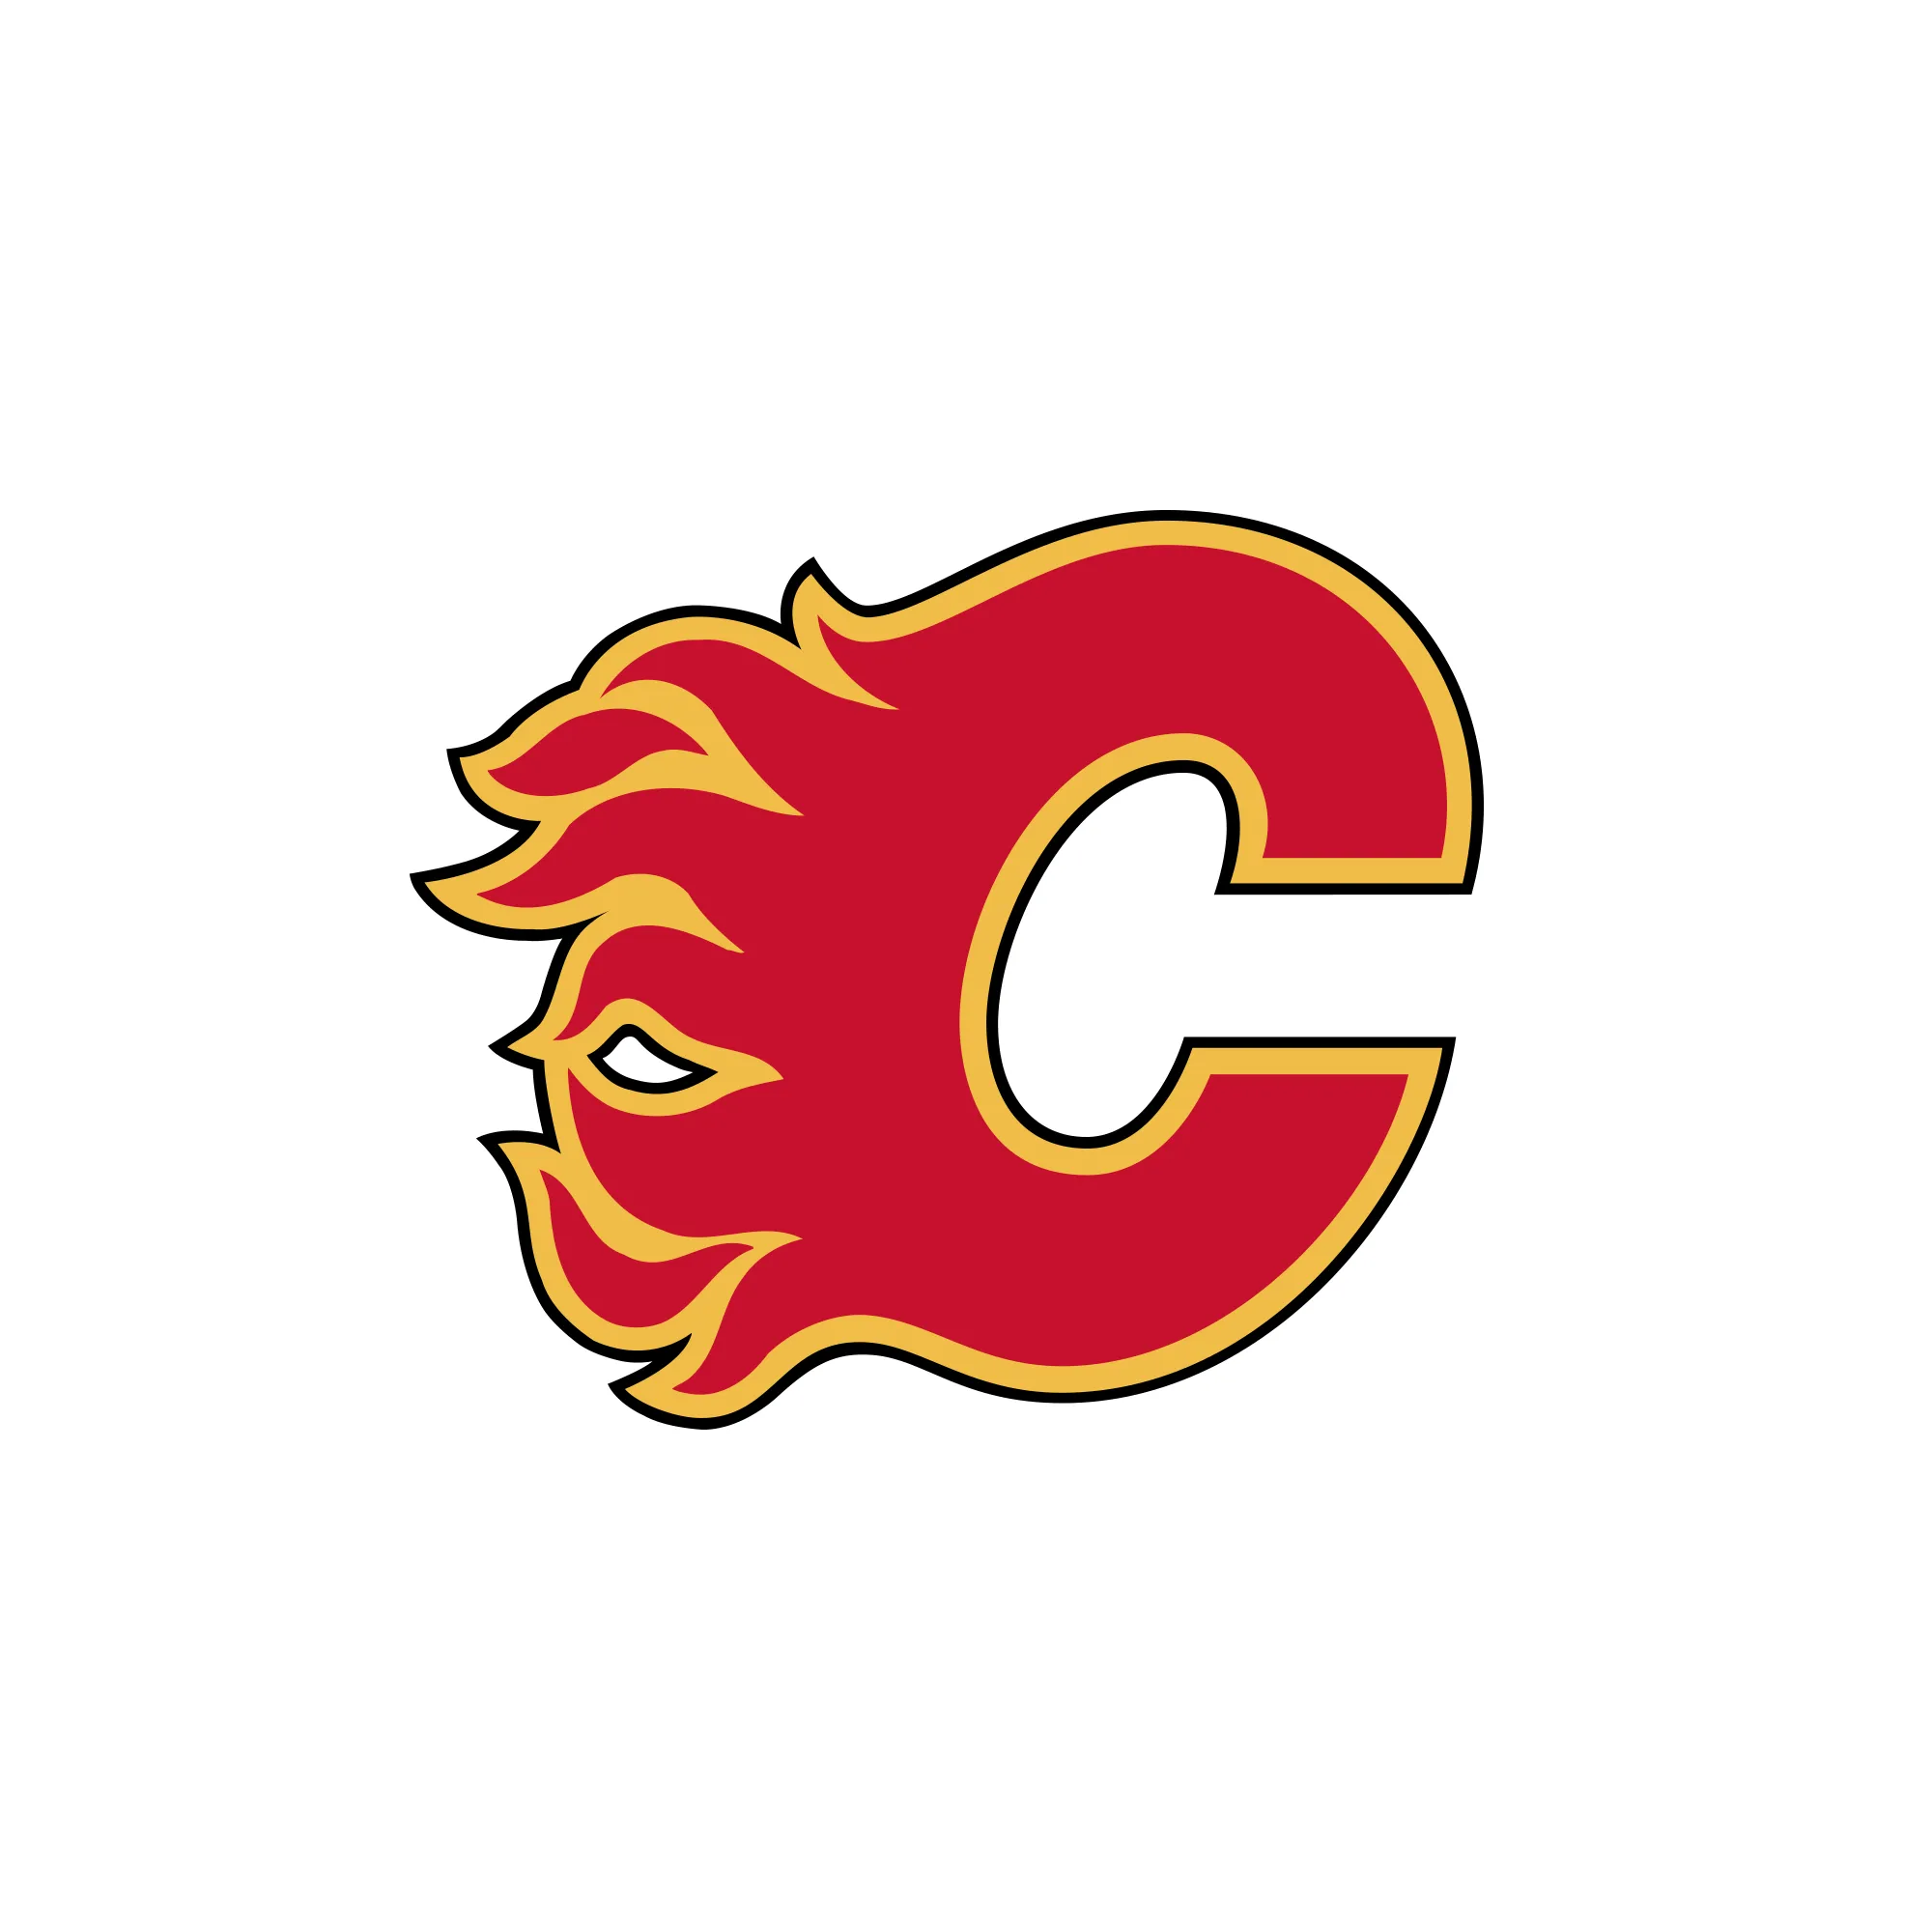 Calgary Flames Full 20232024 Schedule